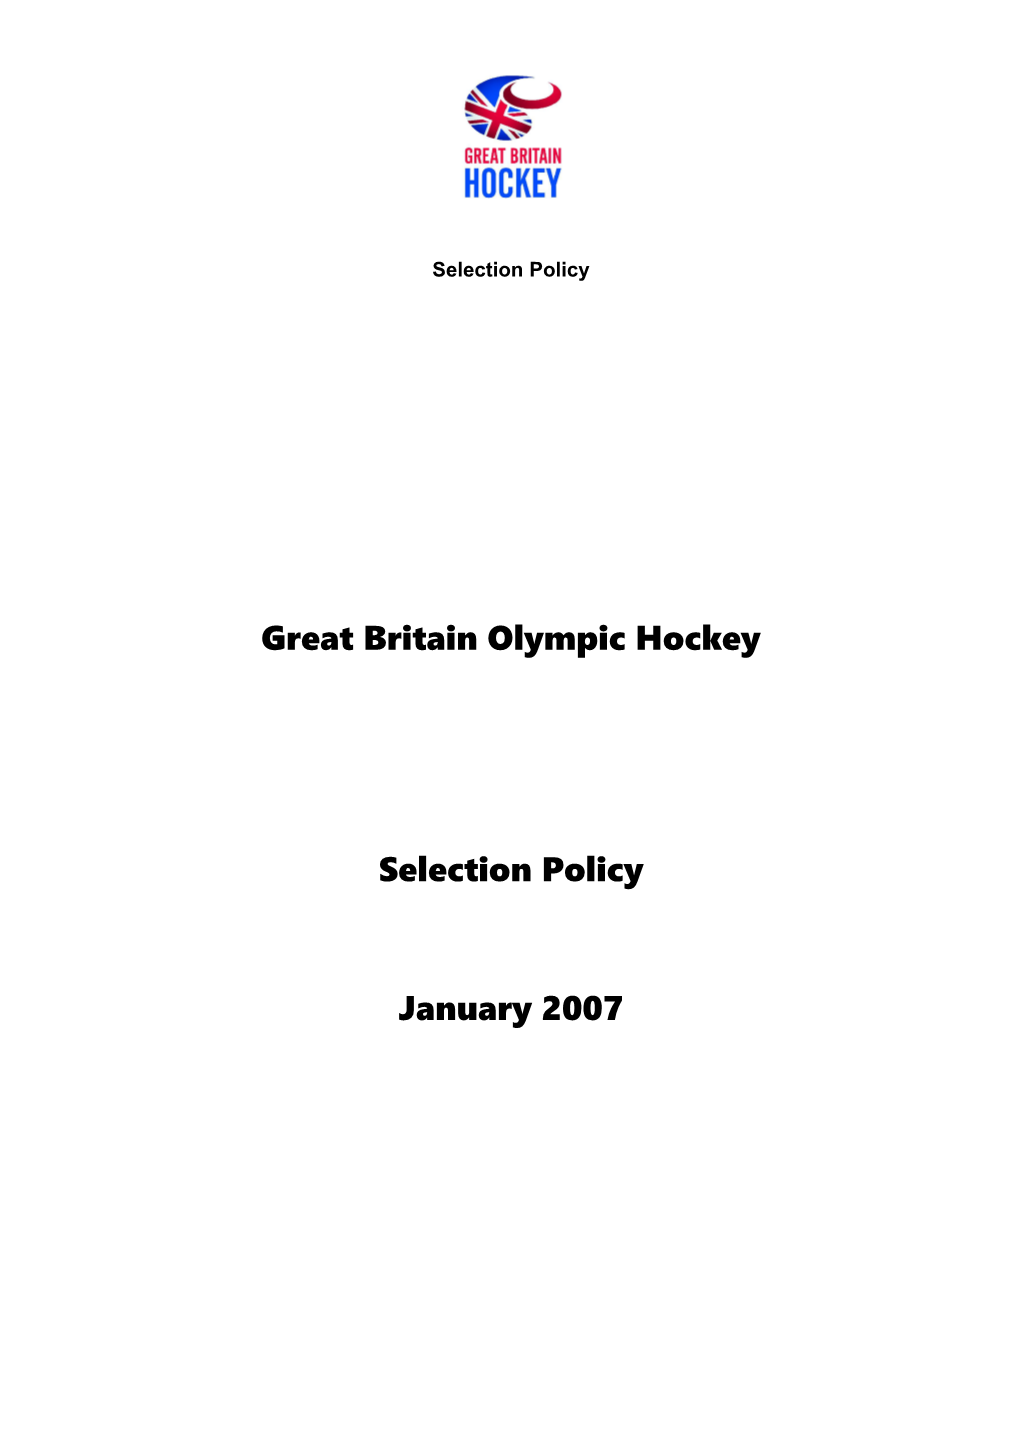 Great Britain Olympic Hockey